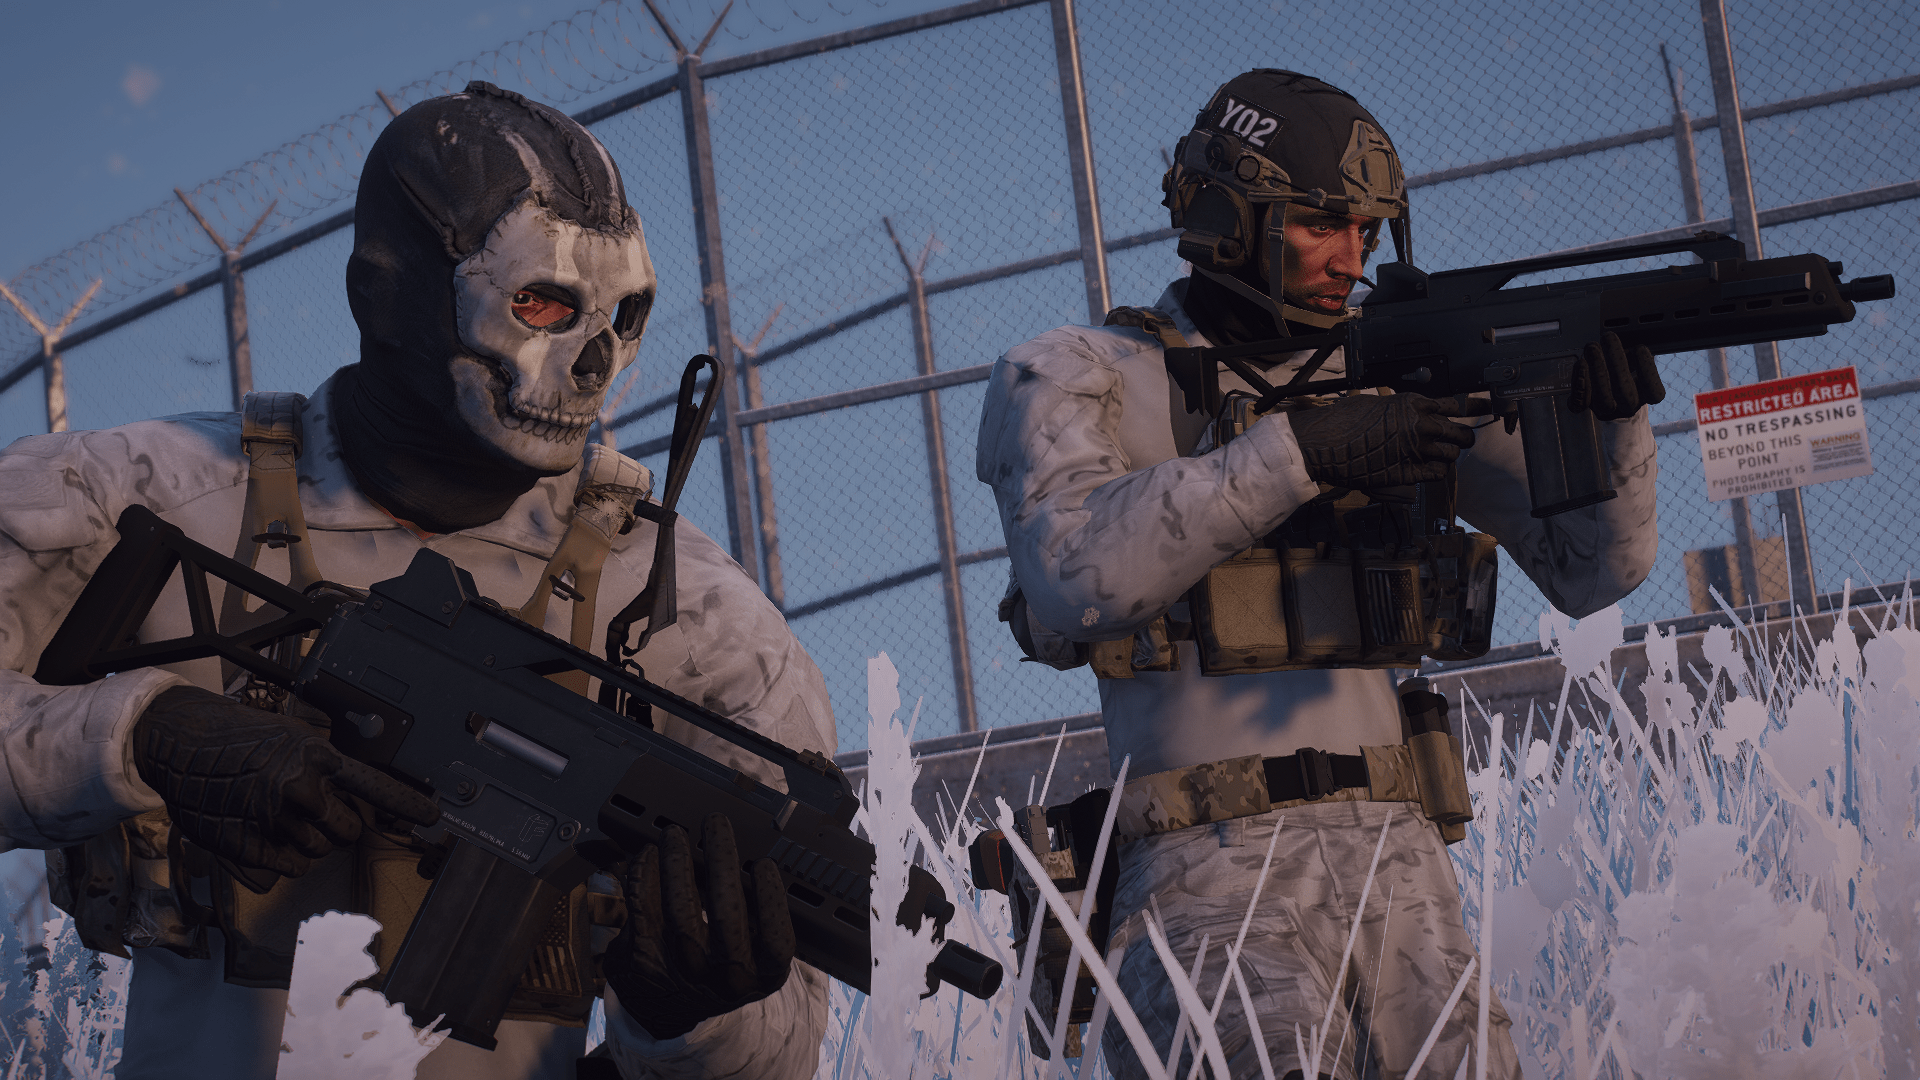 GTA Online: Modern Warfare 2 Ghost Outfits Tutorial! 